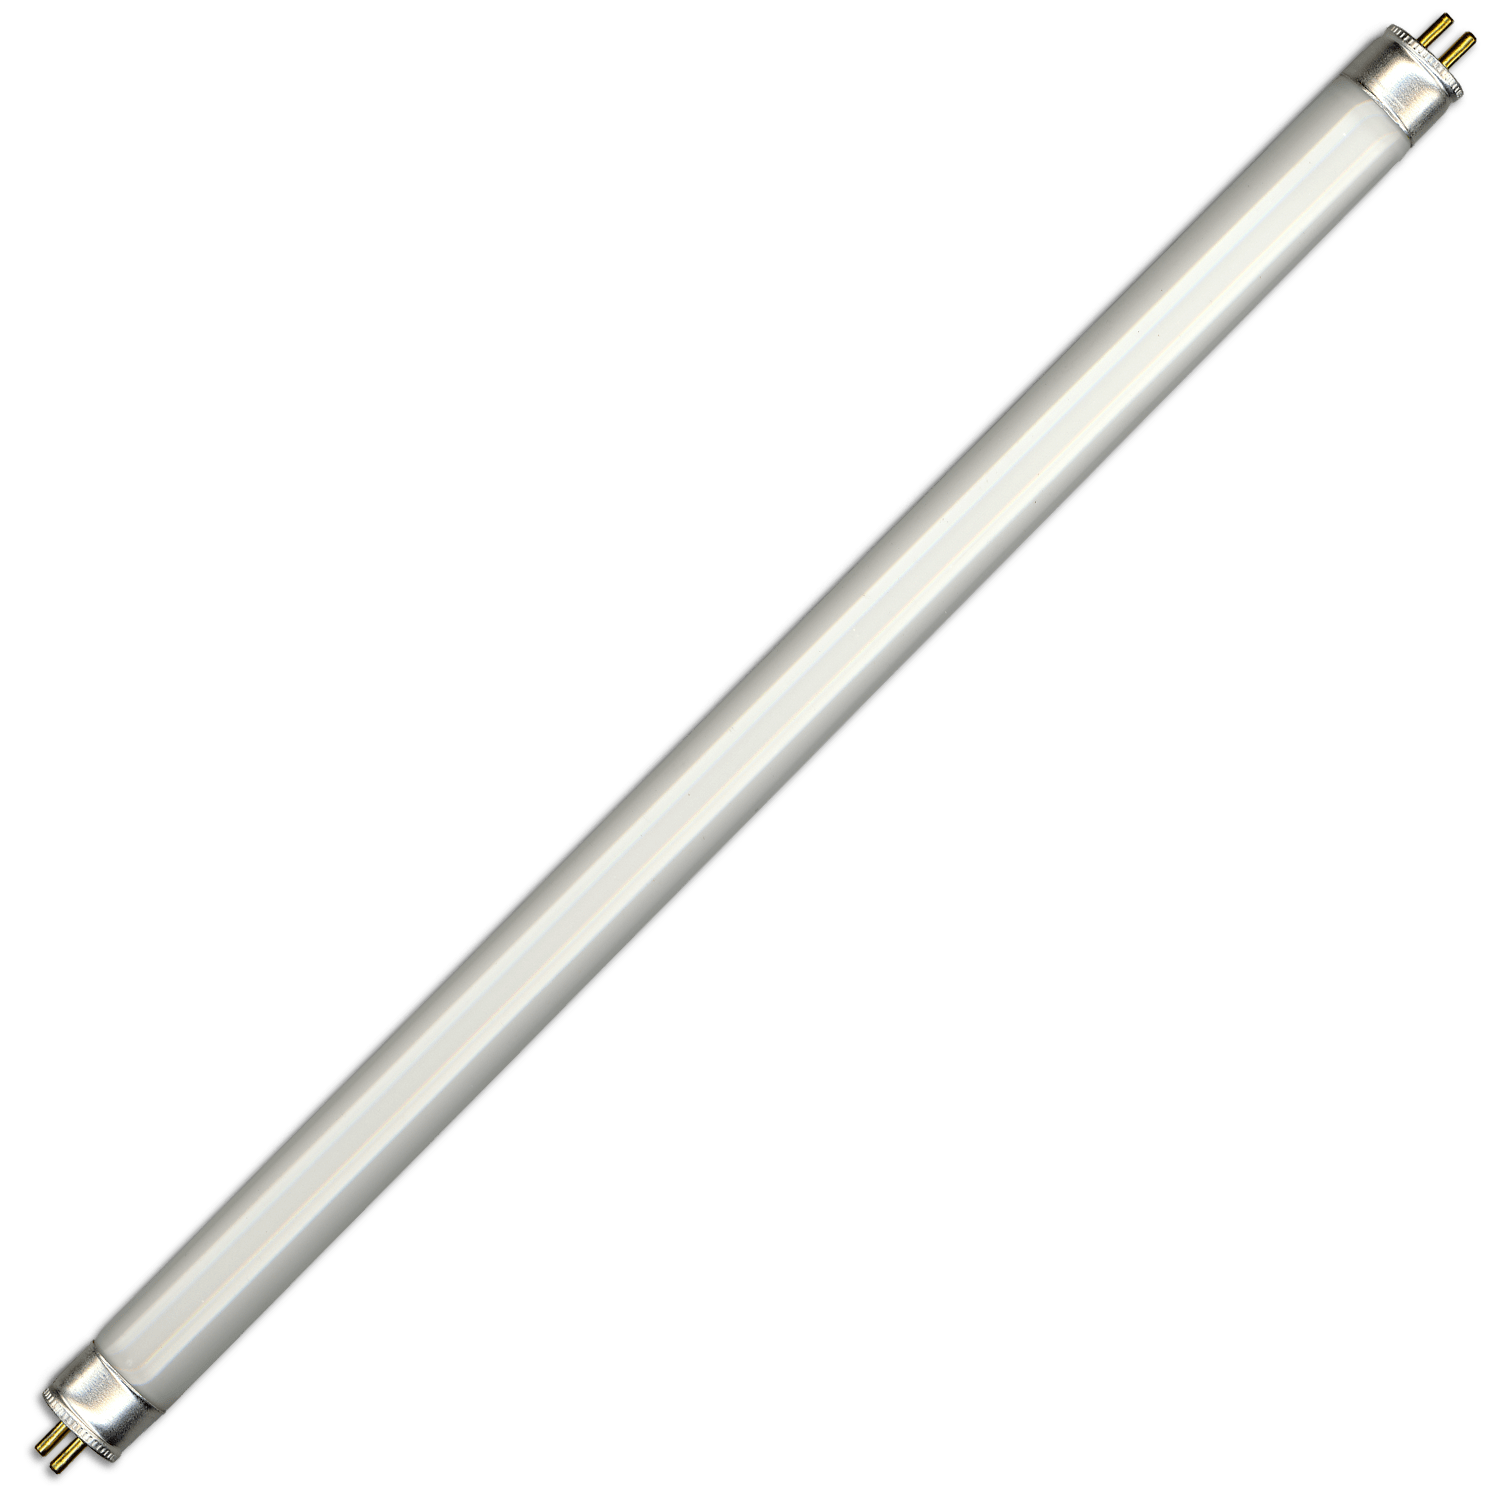 Good-Lite White Fluorescent Replacement Bulb for Daylight Illuminator